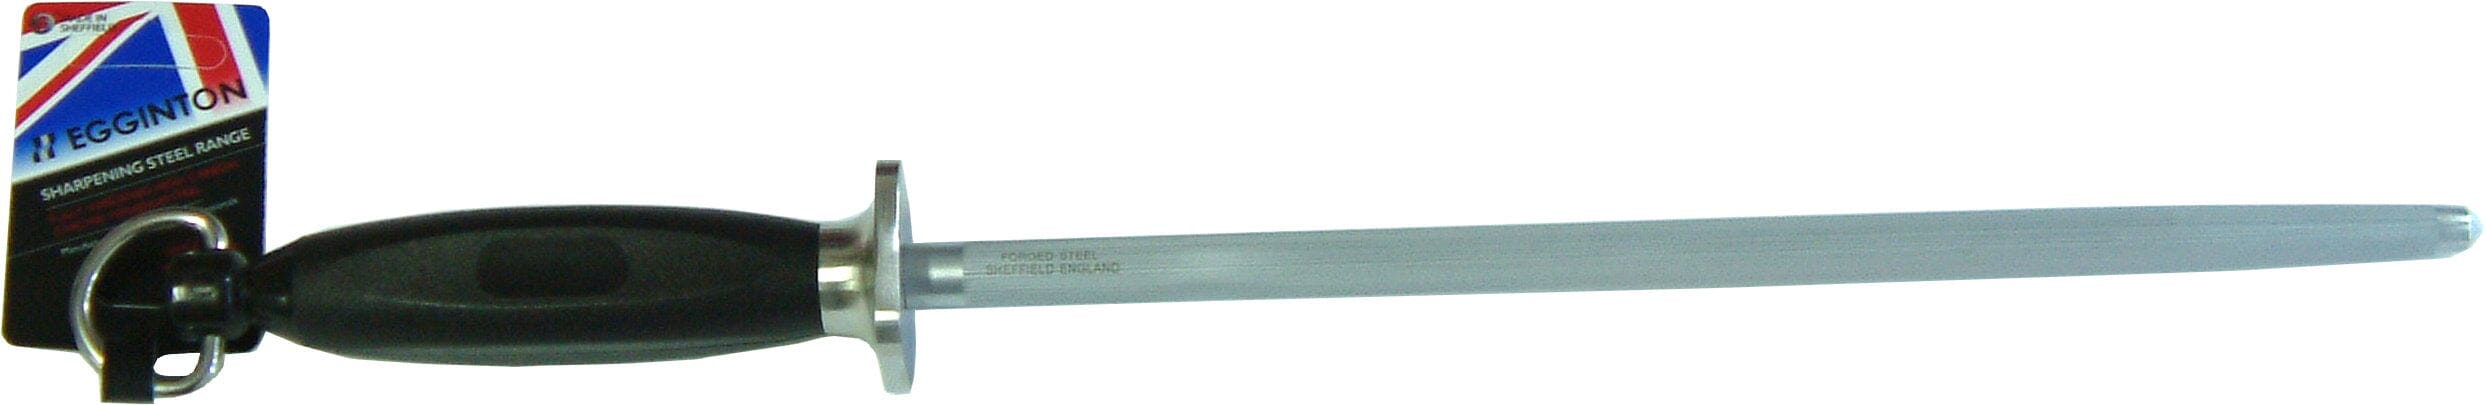 Egginton Sharpening Steel Plastic Handle Stainless Guard P203 #5 300mm